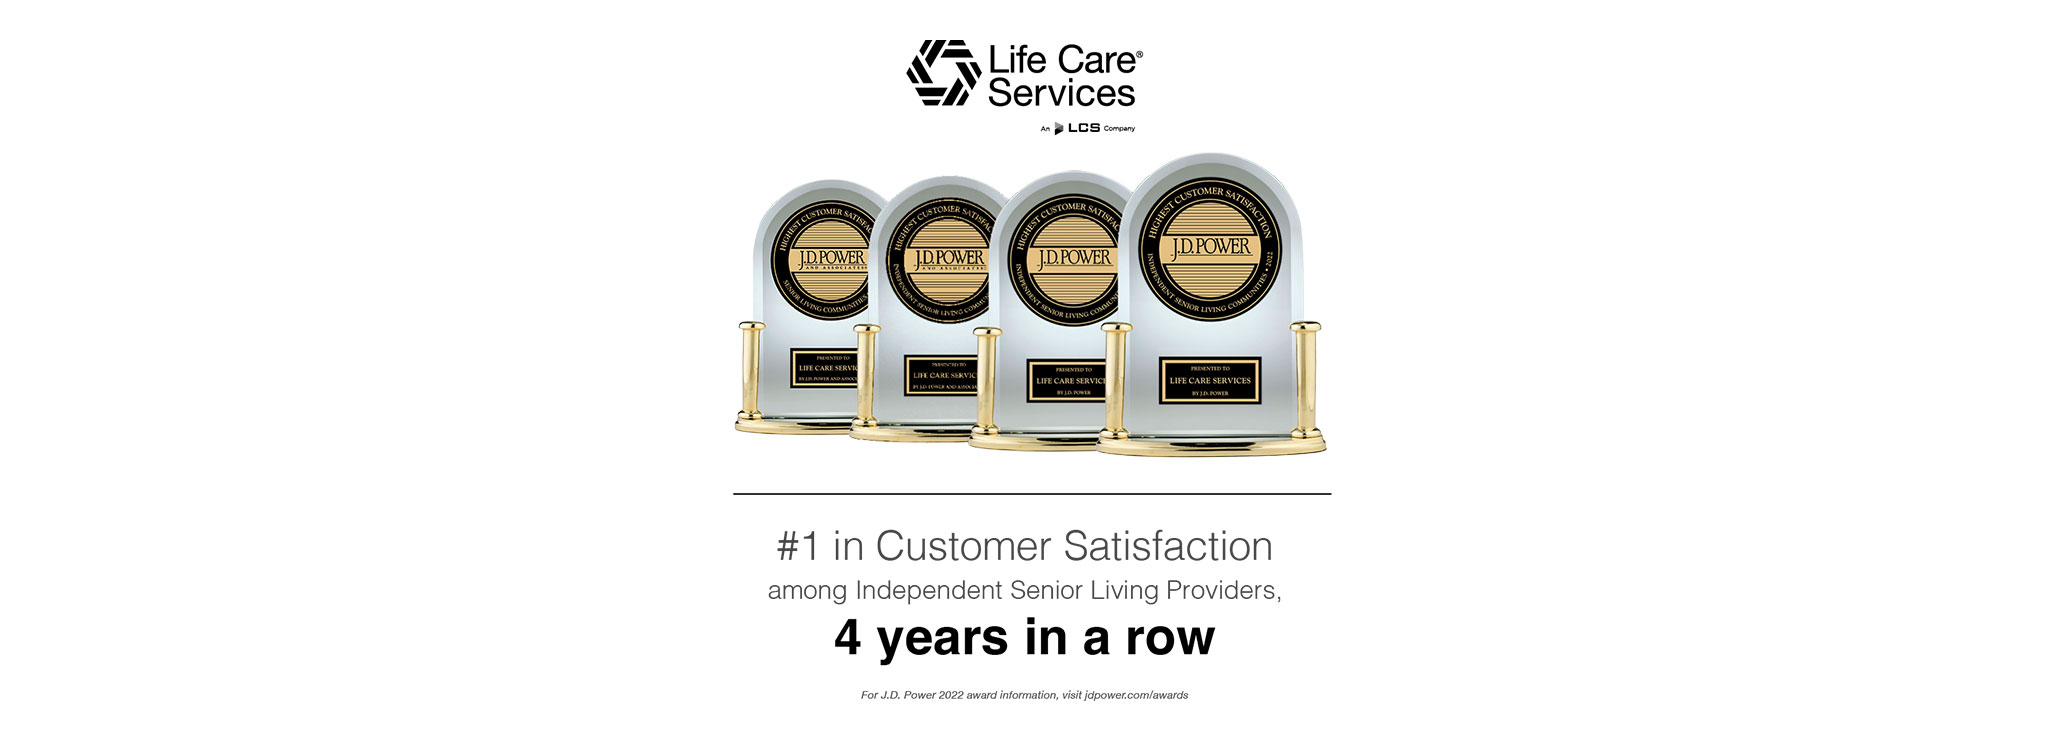 J.D. Power Award for Customer Satisfaction